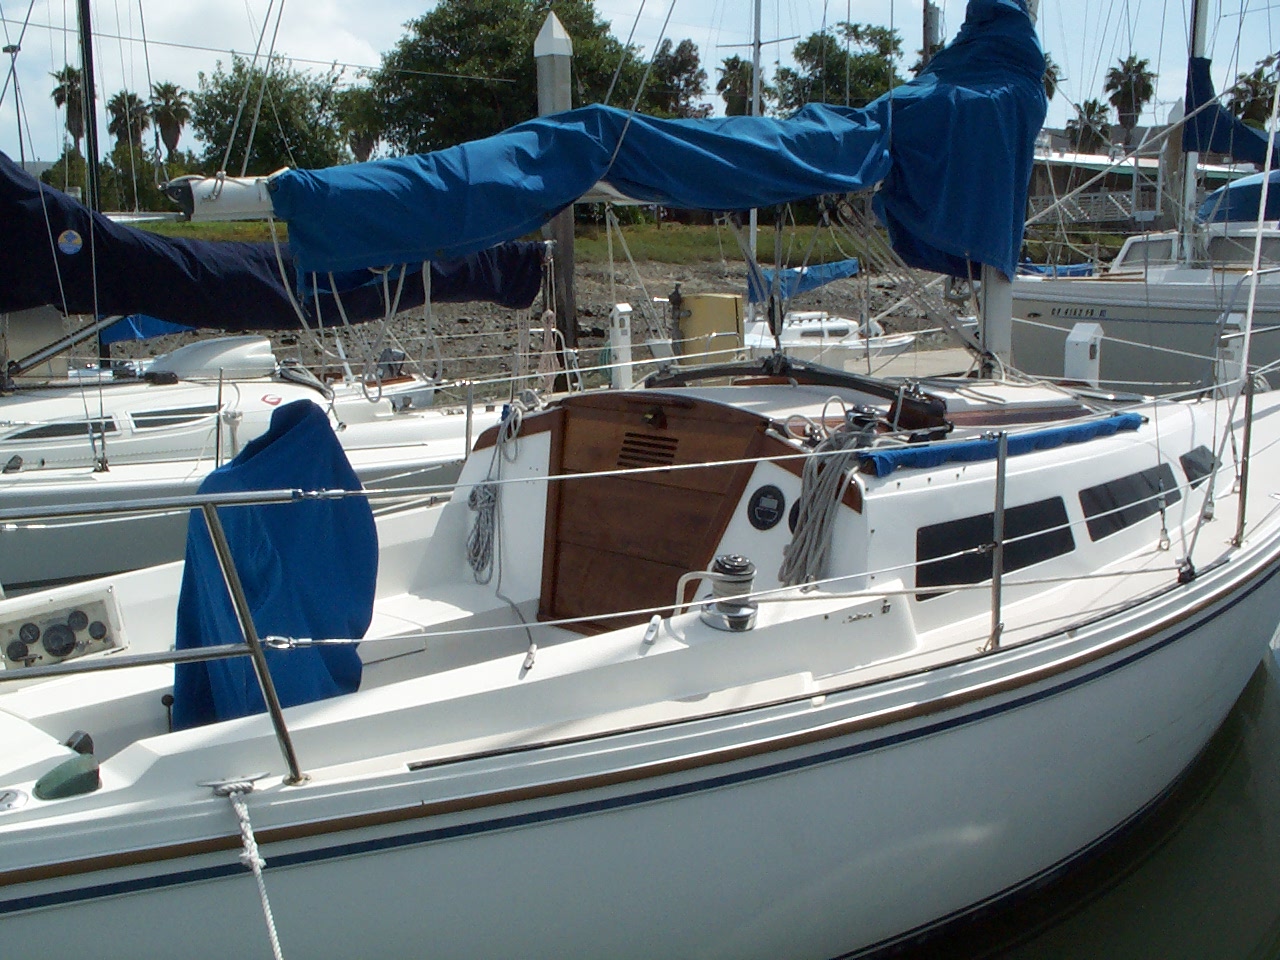 chrysler 27 sailboat review